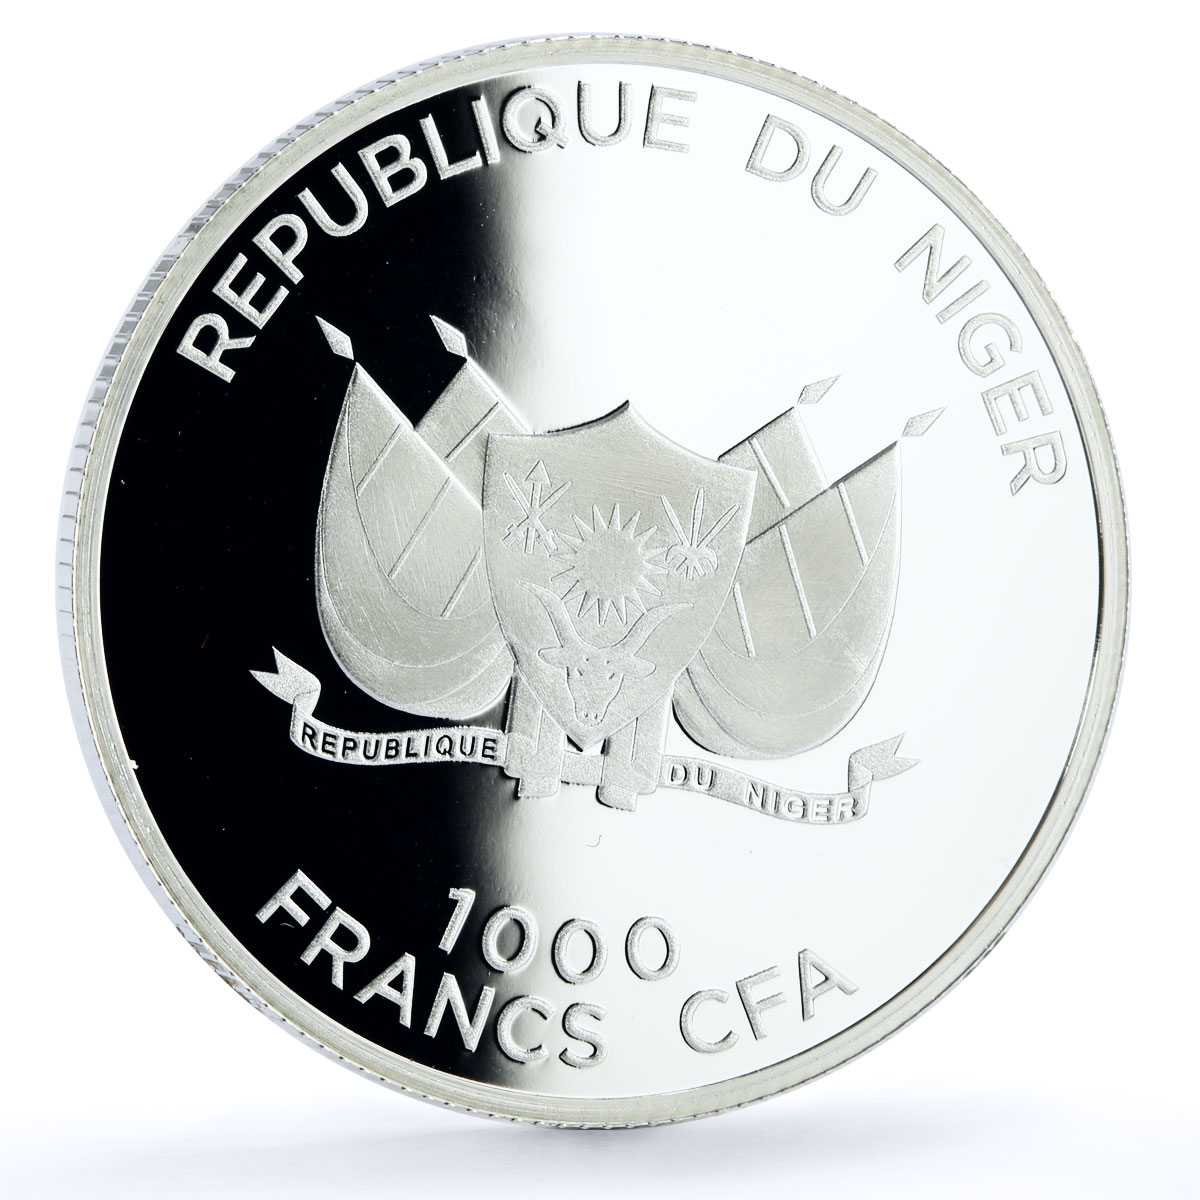 Niger 1000 francs Trains Railways Mediterranean Locomotive silver coin 2012